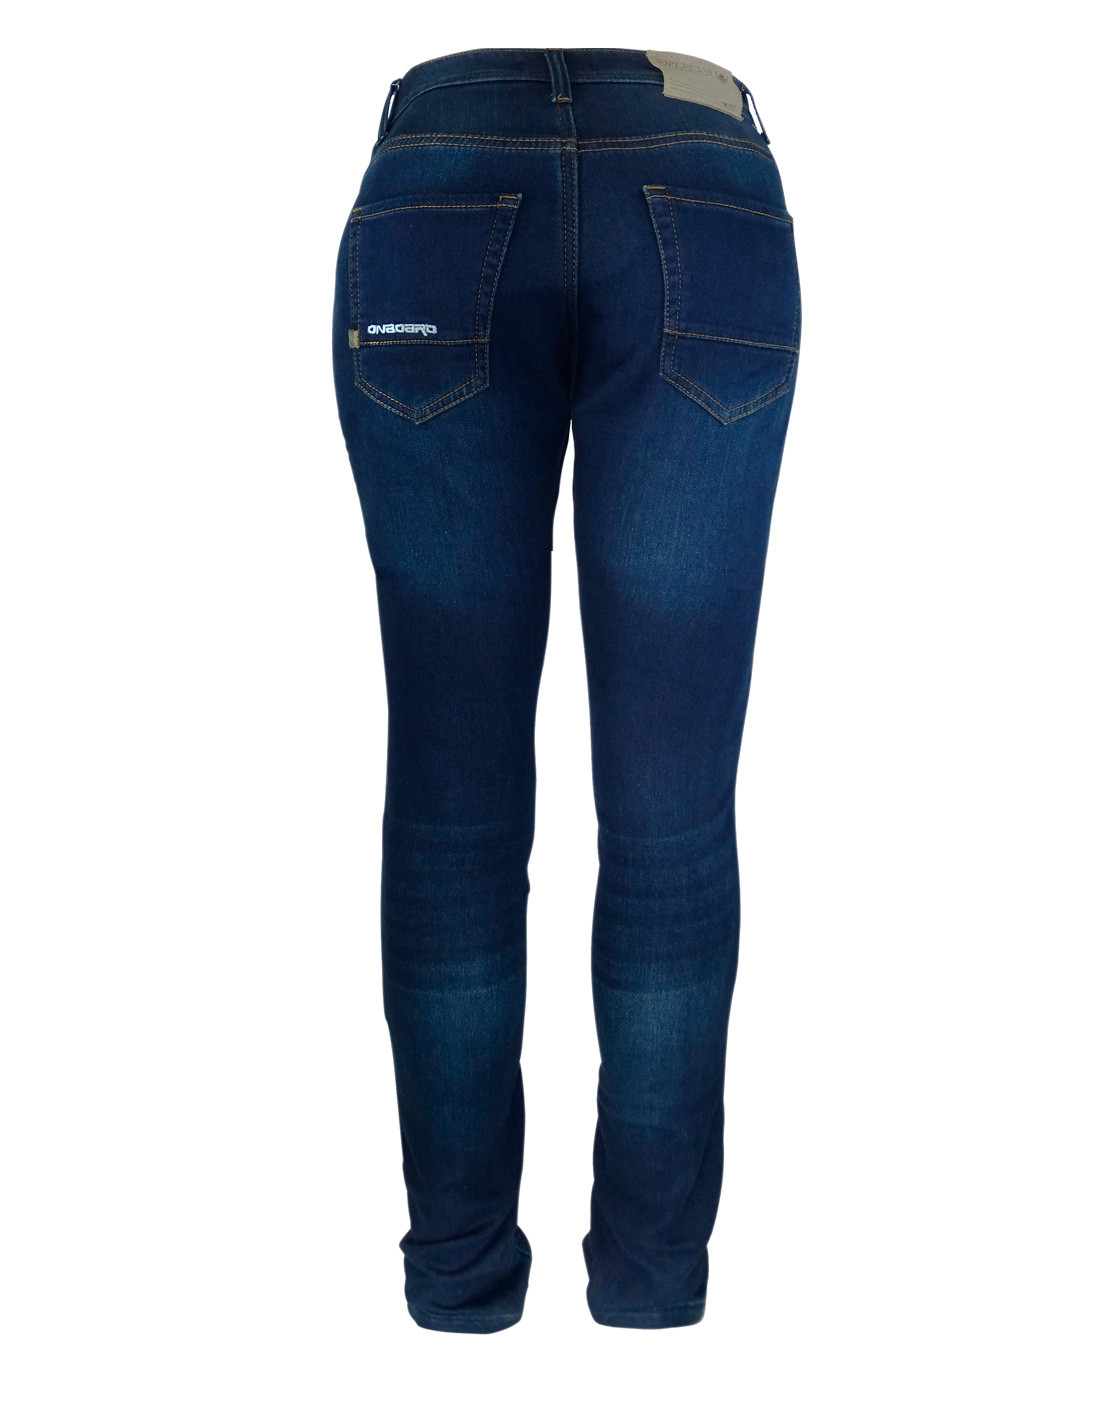 Pantalón tejano moto con kevlar para mujer. ON BOARD 02 azul